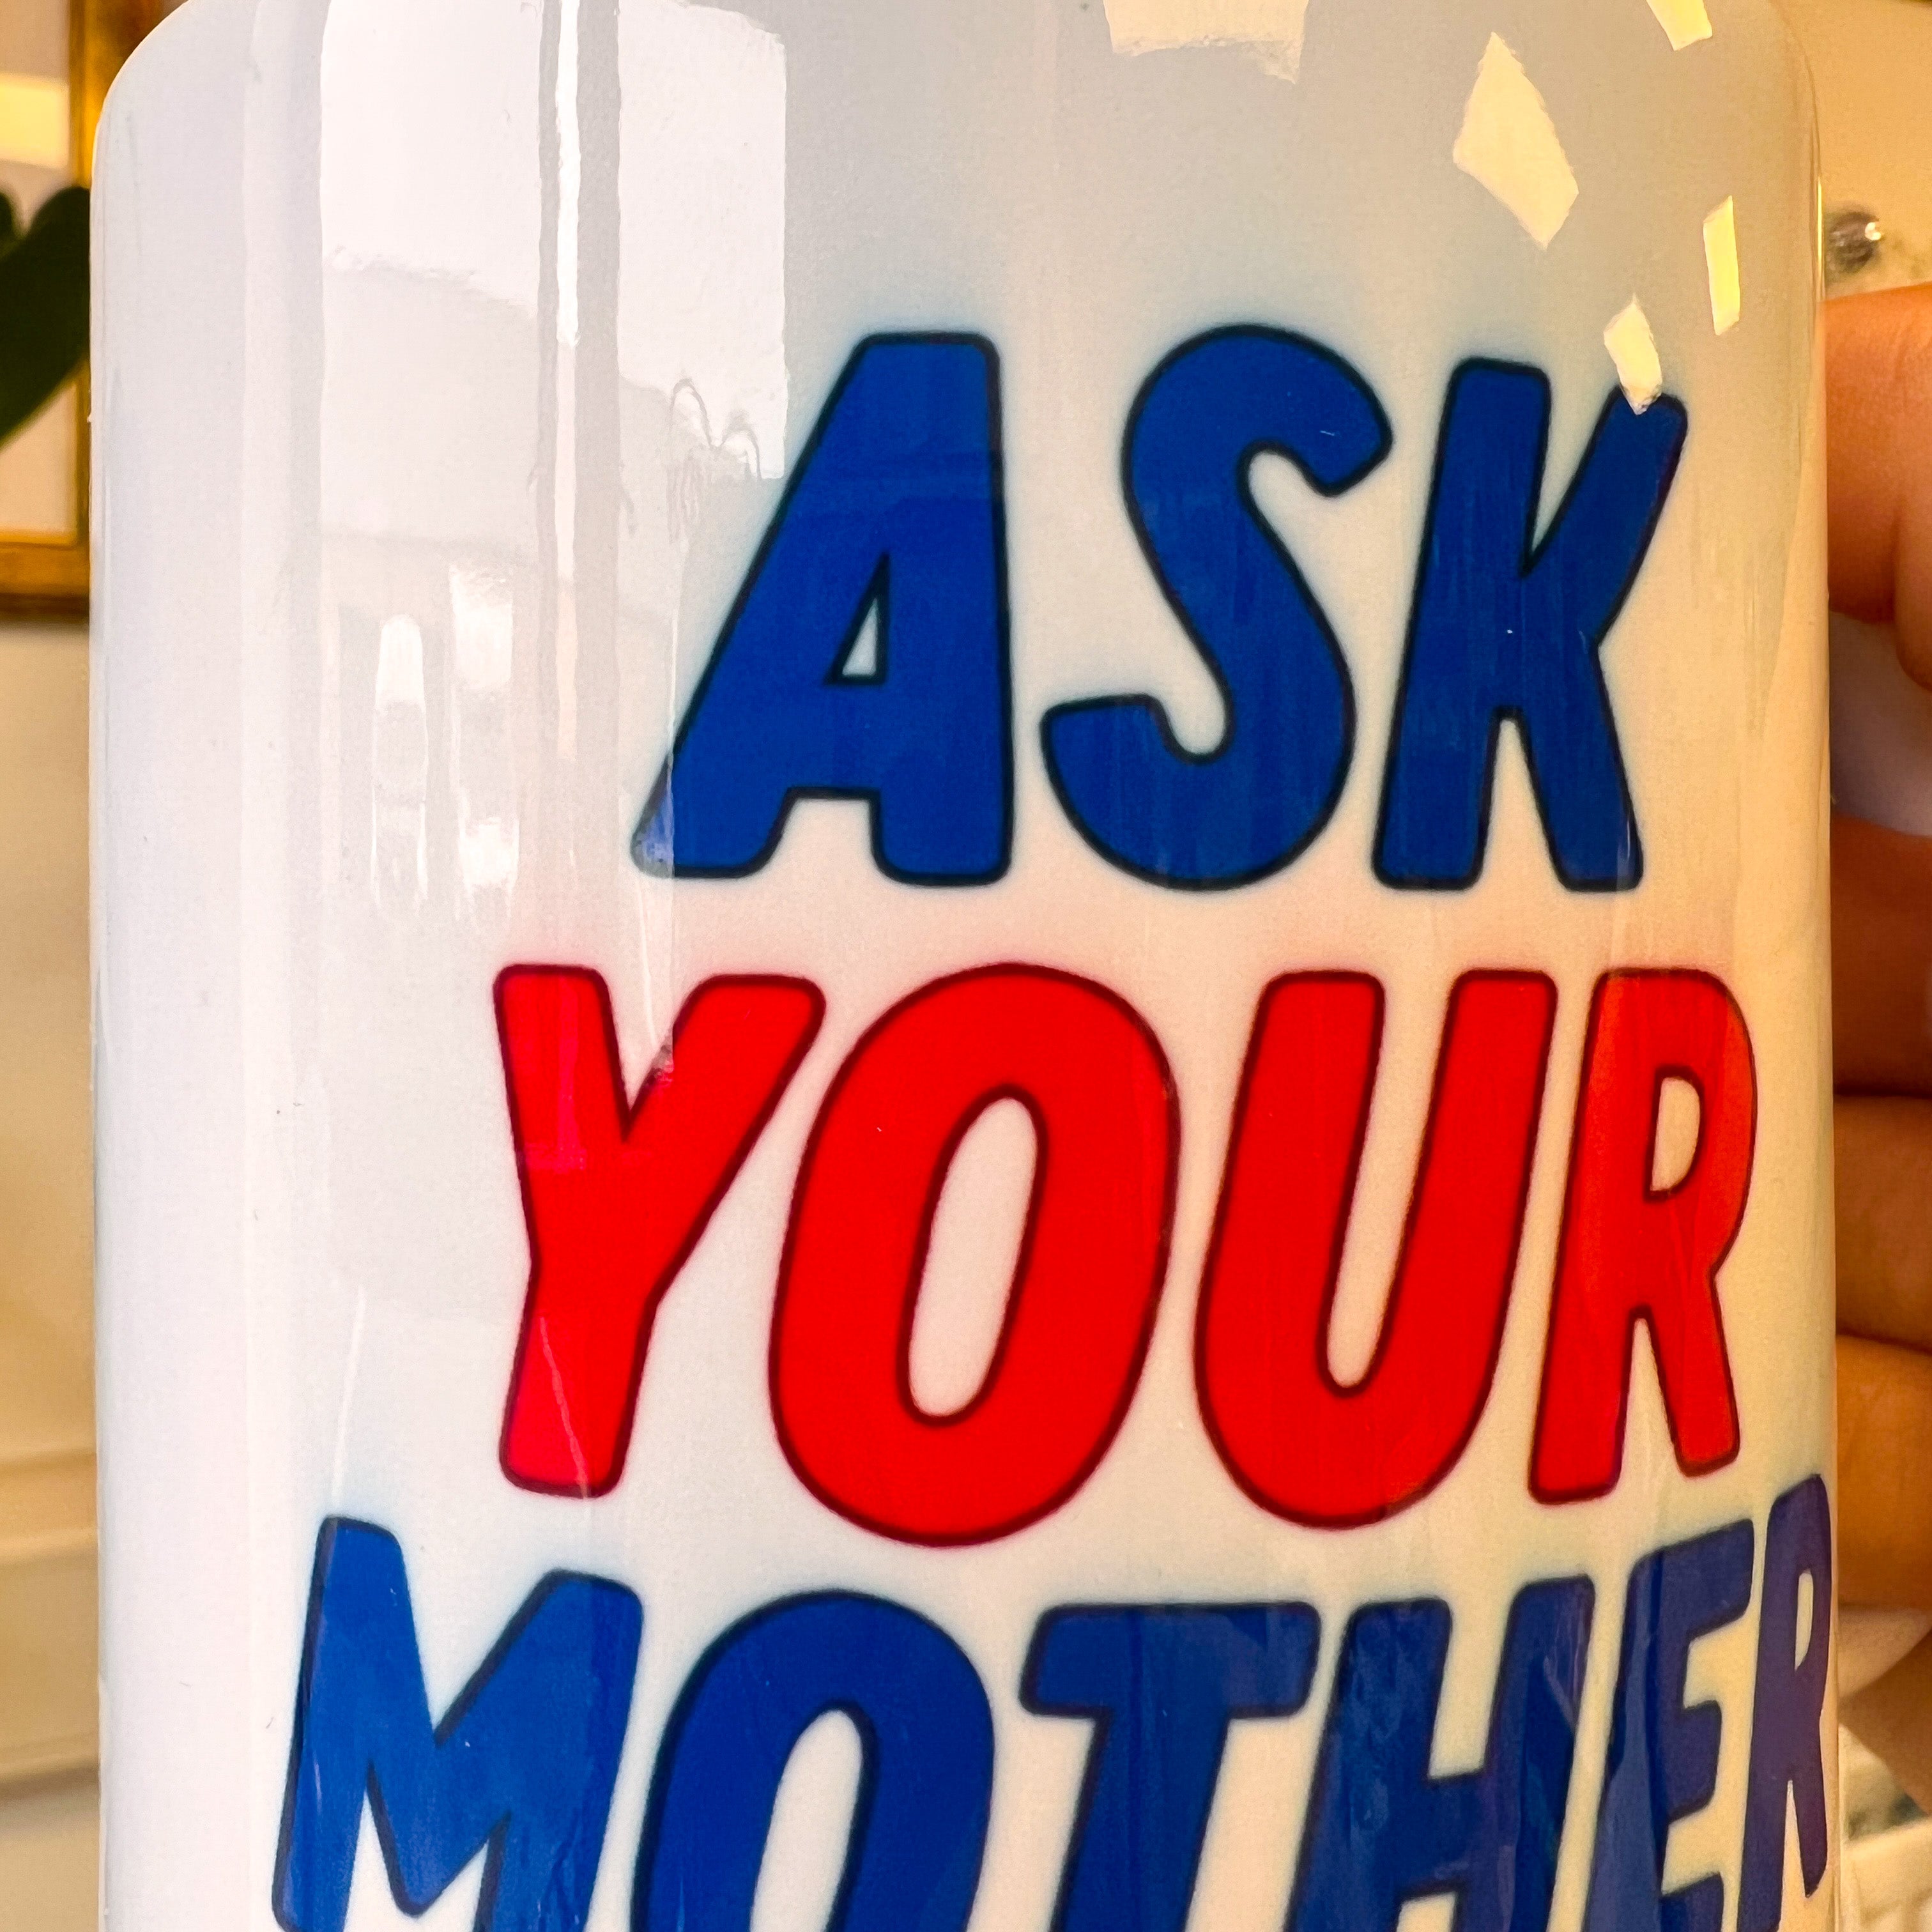 Ask your mother faulty mug